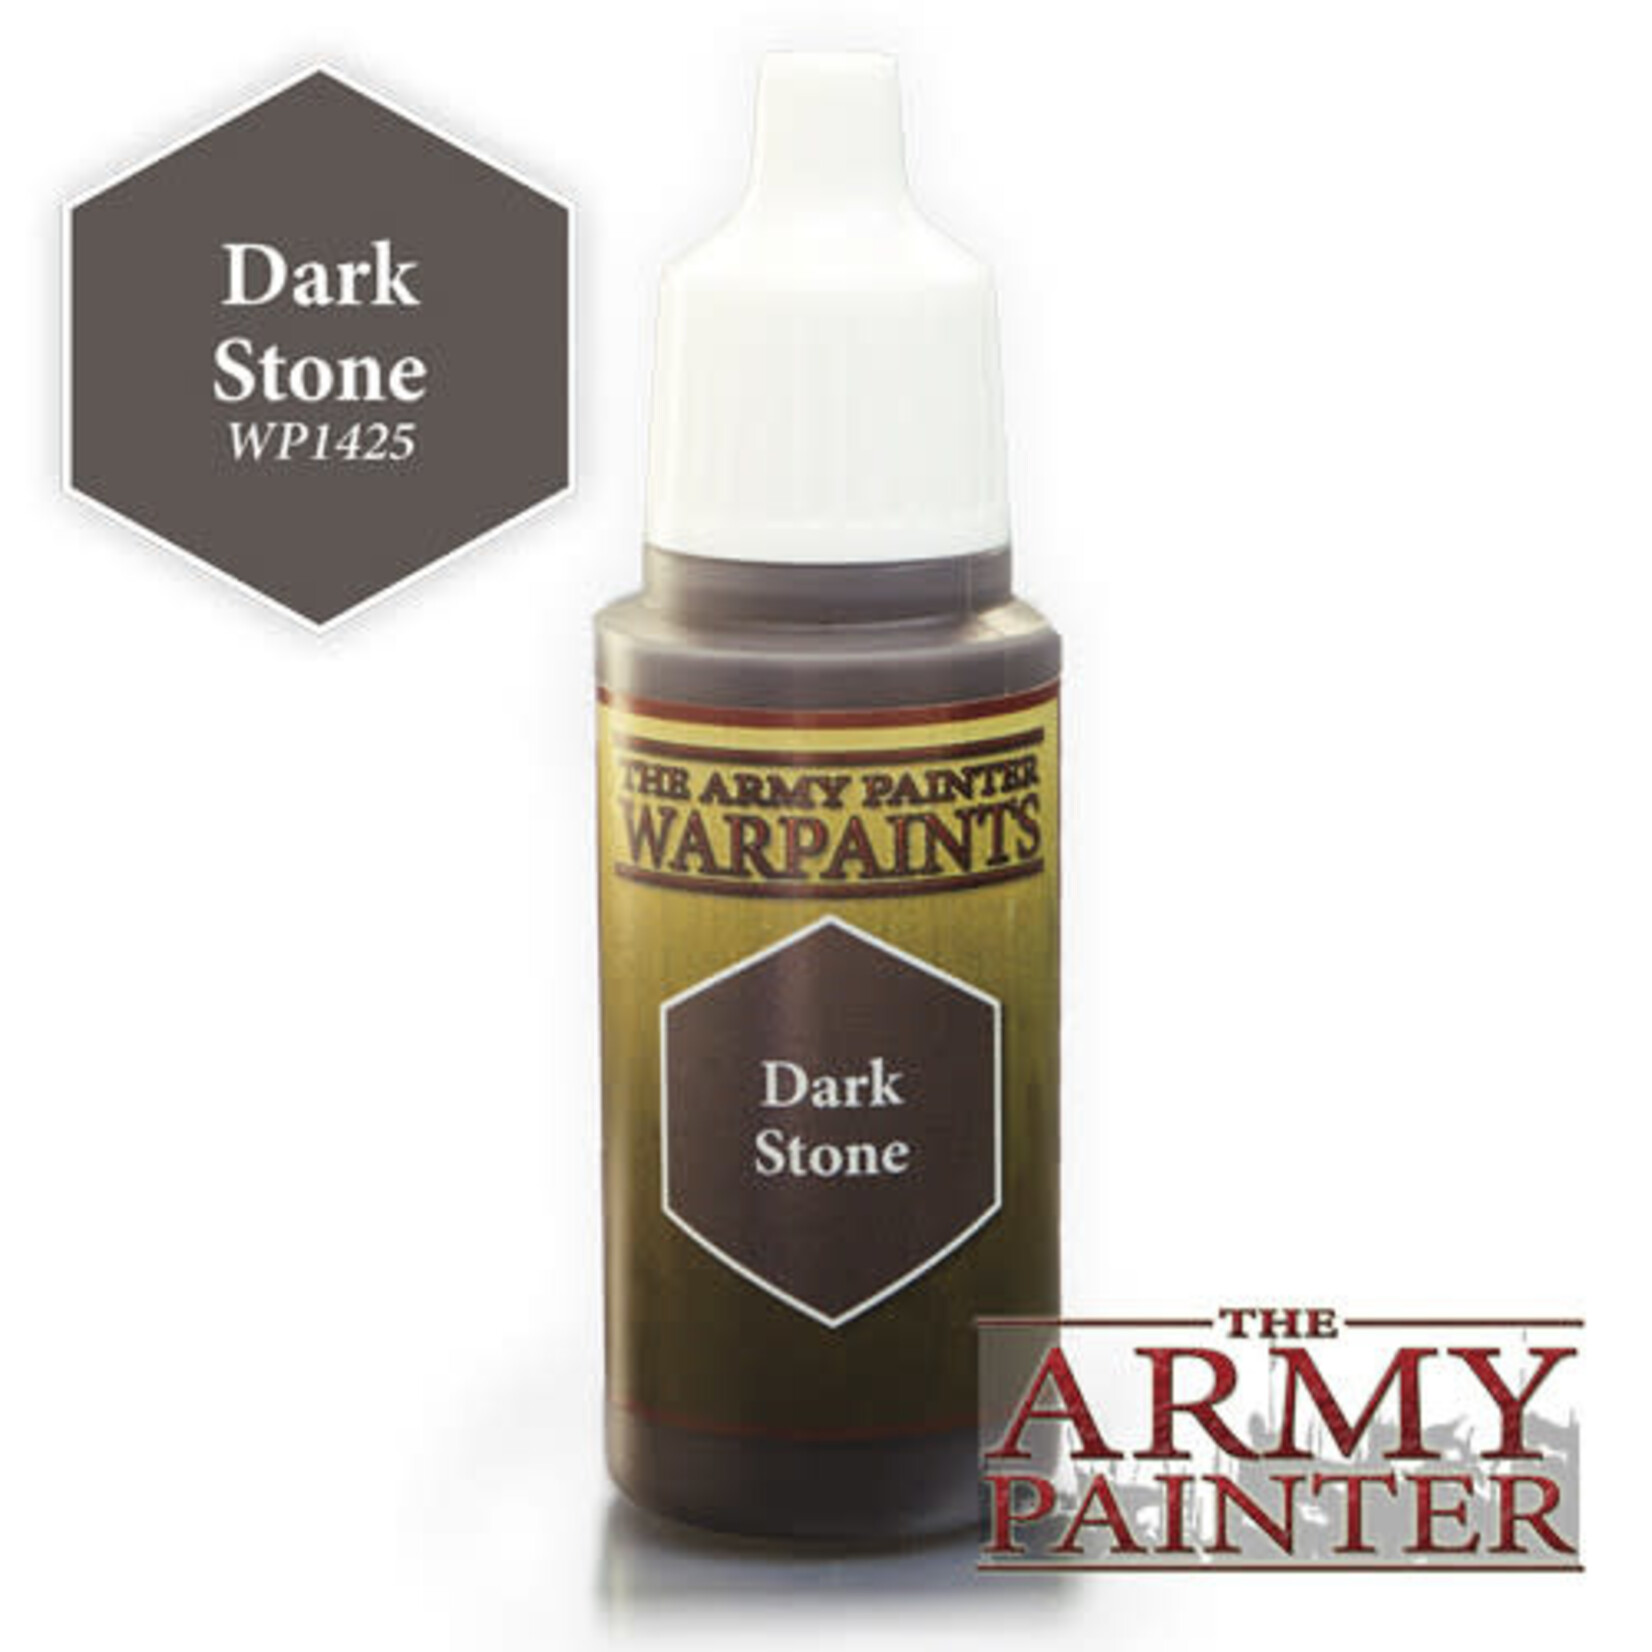 The Army Painter Warpaints: Dark Stone 18ml